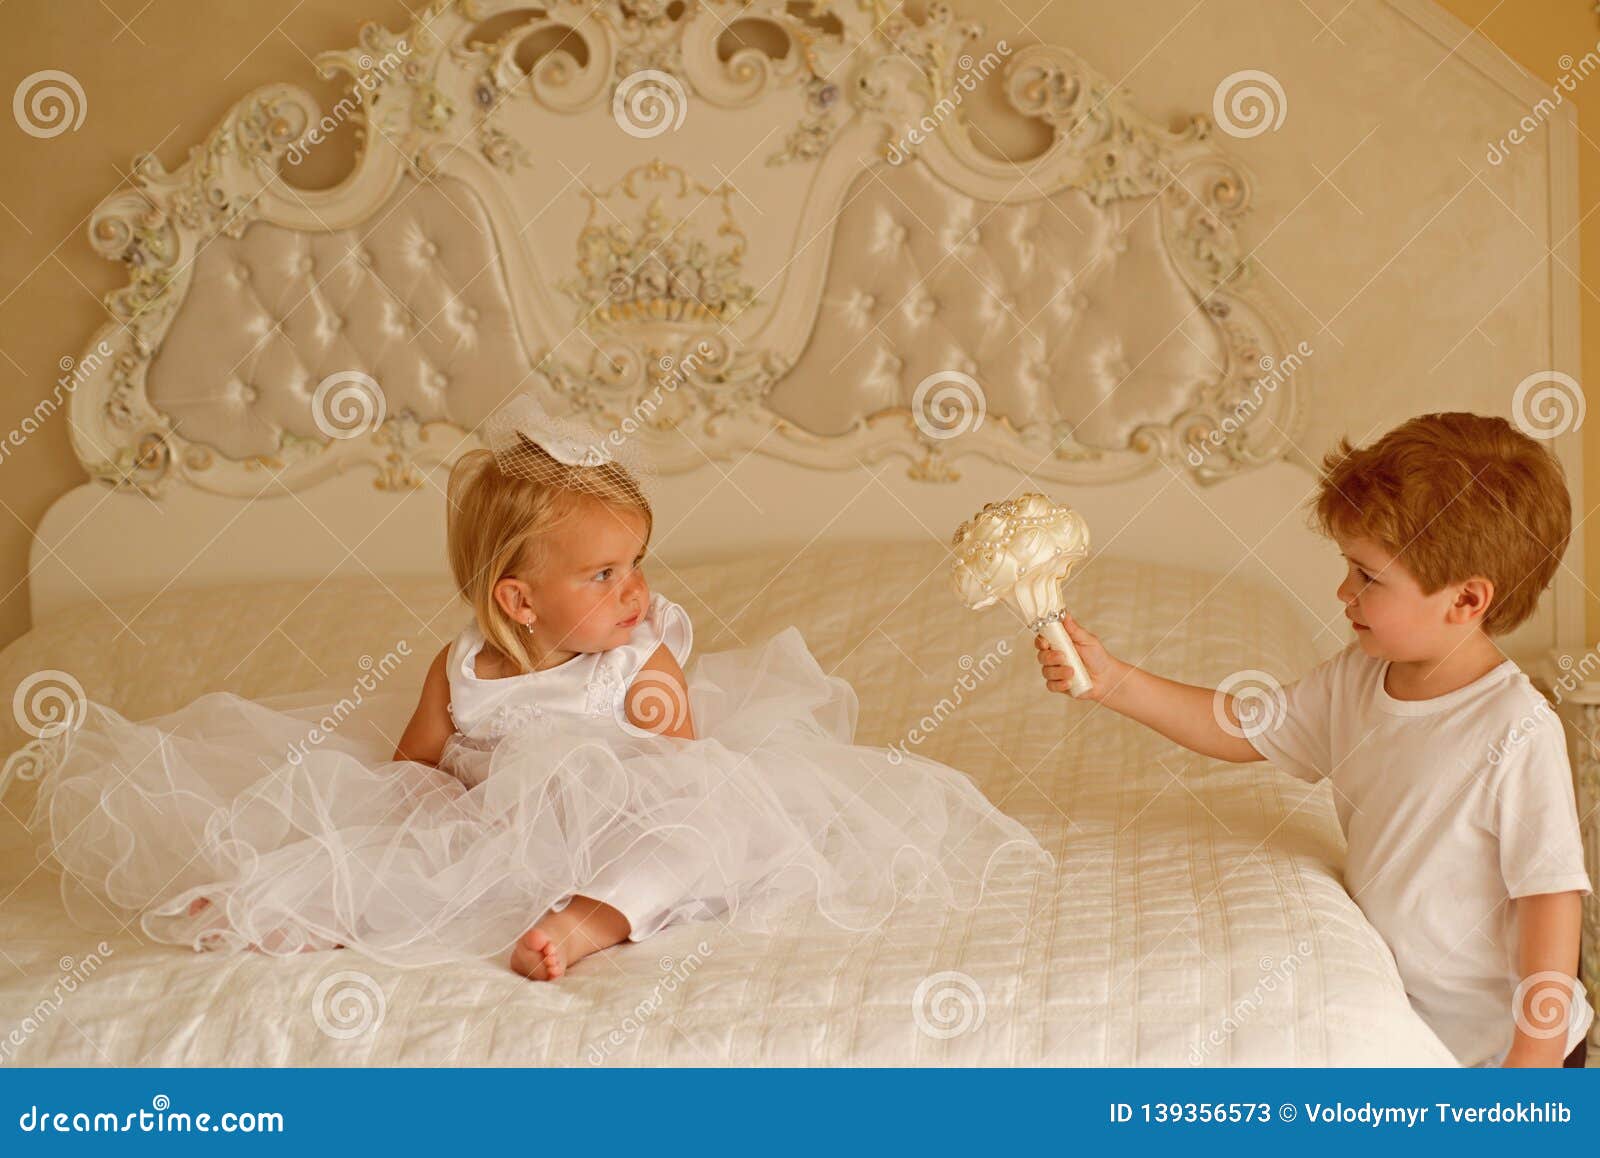 The Best Hair Style. Little Children Ready for Wedding Ceremony. Children  Development Stock Image - Image of small, wedding: 139356573